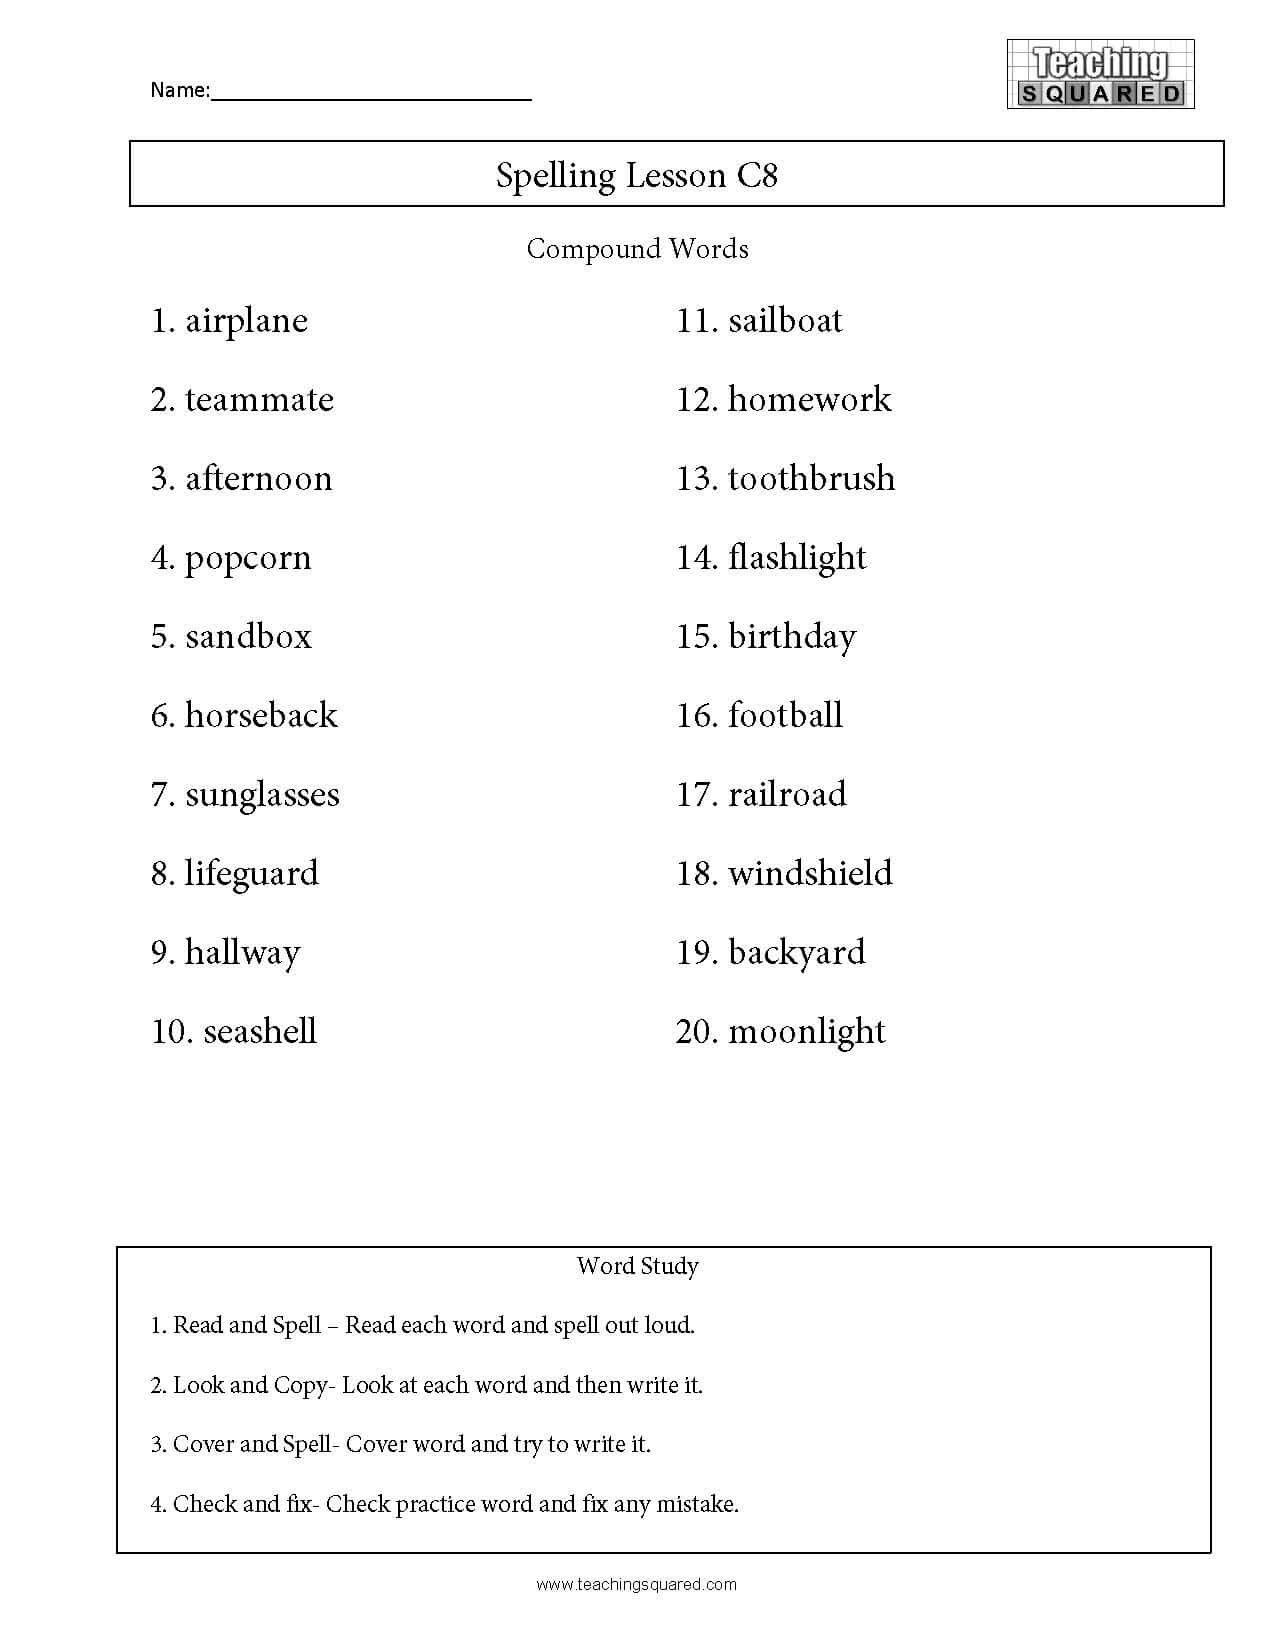 Spelling Worksheets 3rd Grade 3rd Grade Spelling Lists Teaching Squared